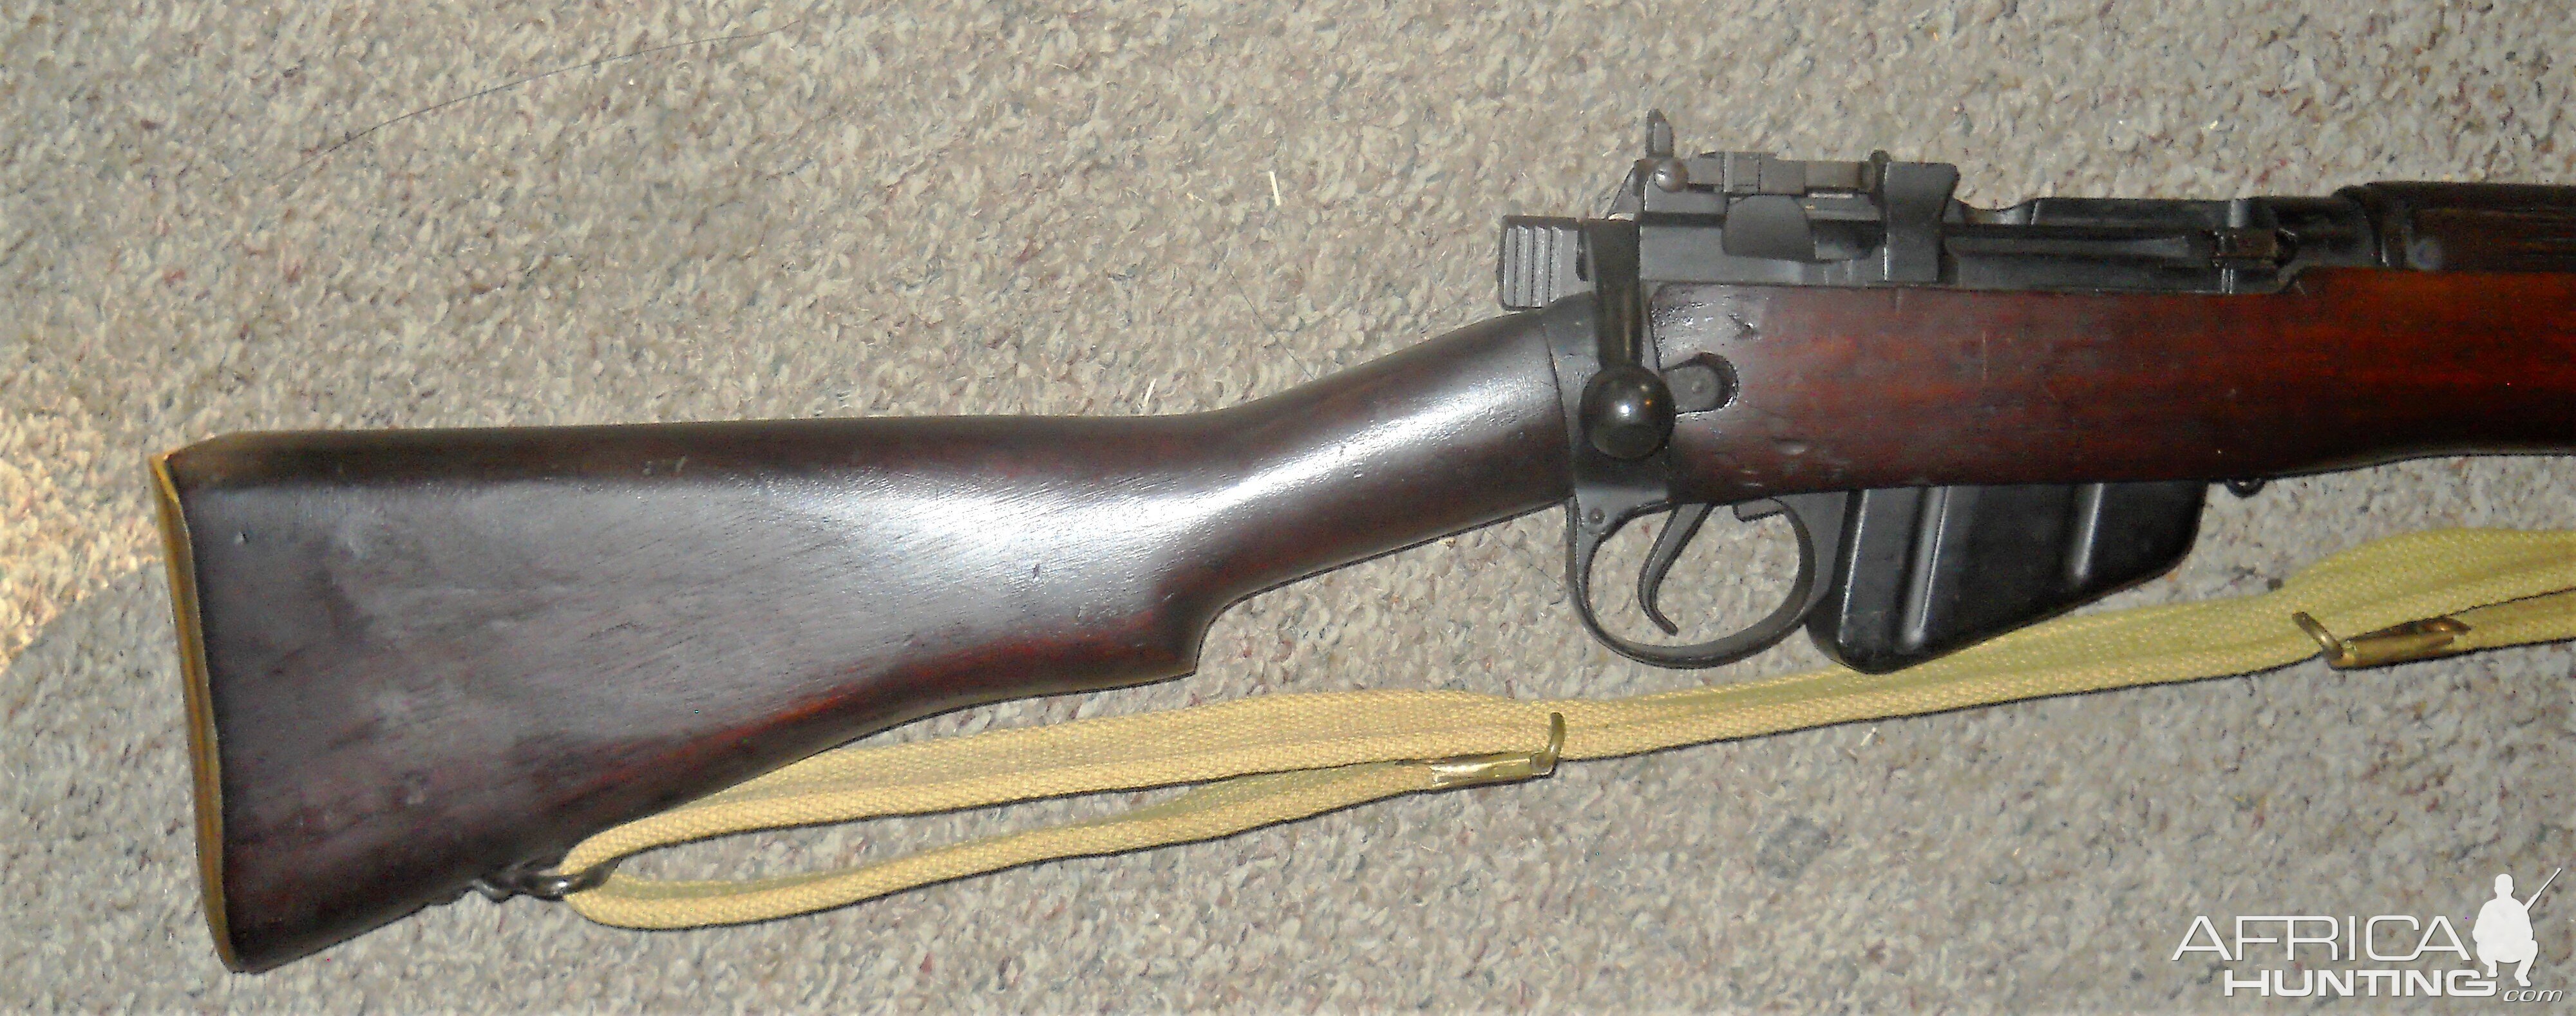 303 Lee Enfield Rifle